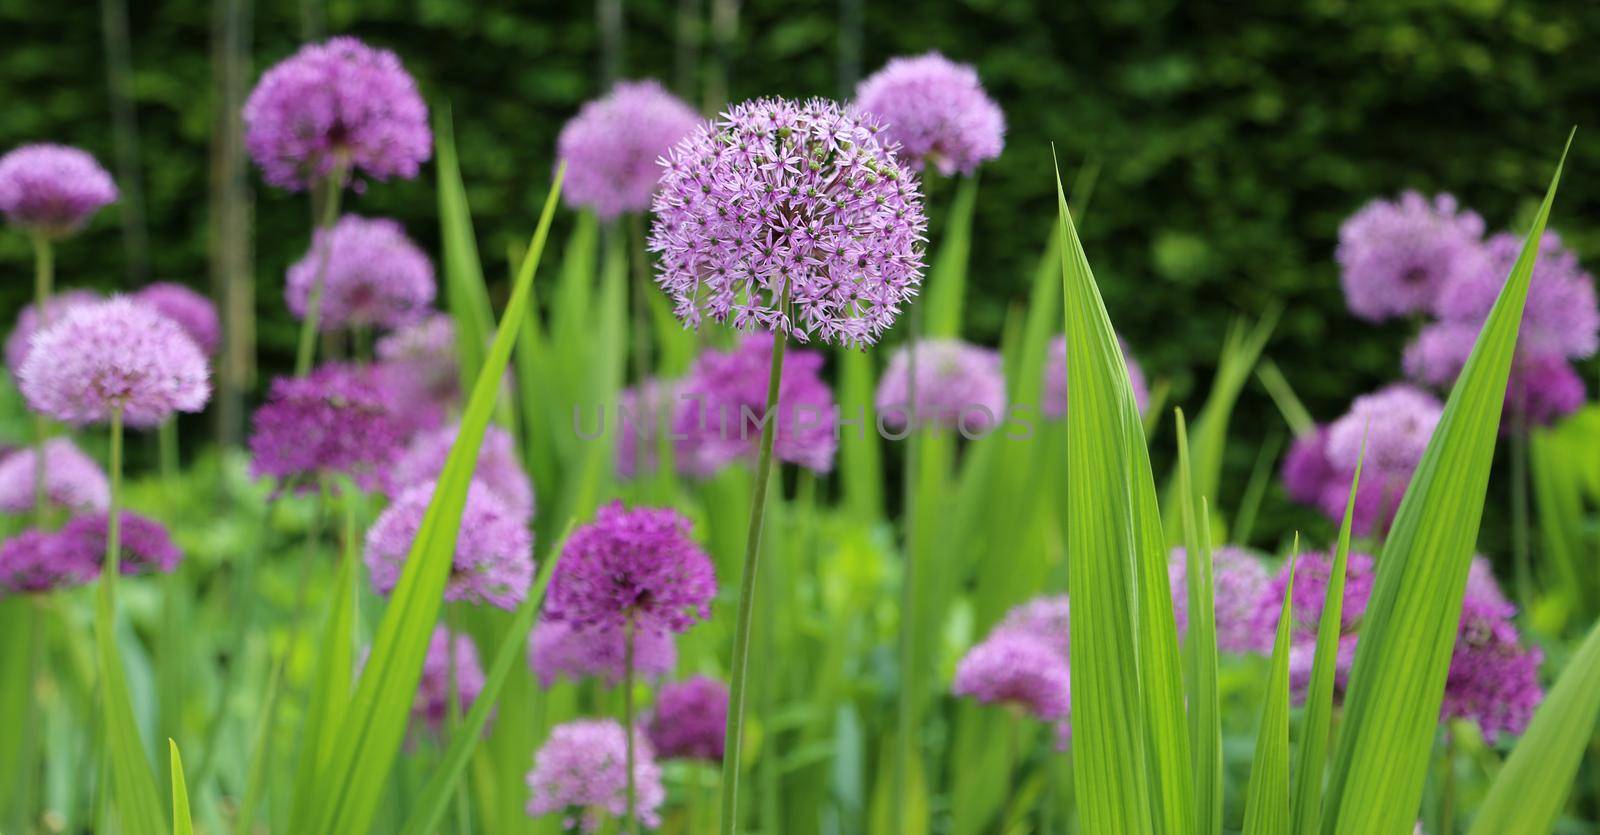 Spring garden violet flowers in green grass. Close up